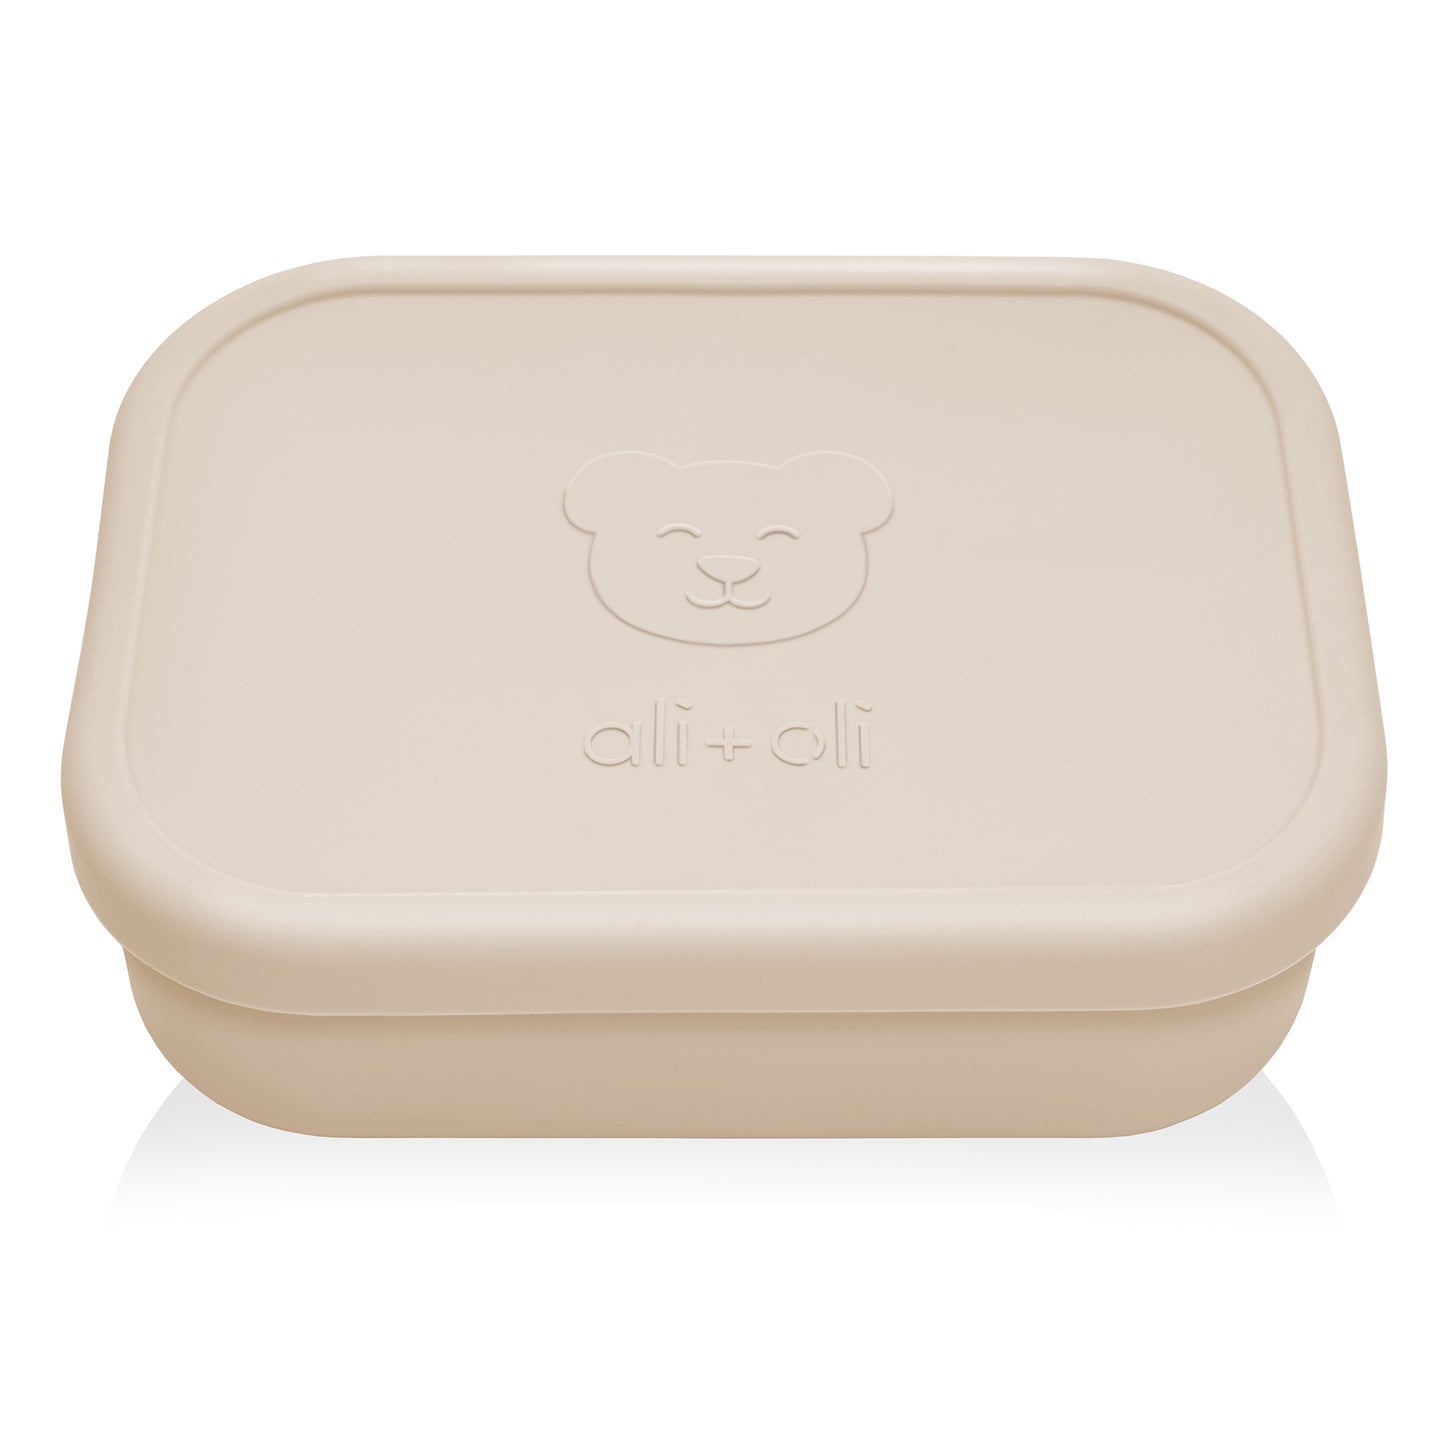 Ali+Oli Reusable Silicone Bento Box - 3 Compartments - Leakproof (Coco)